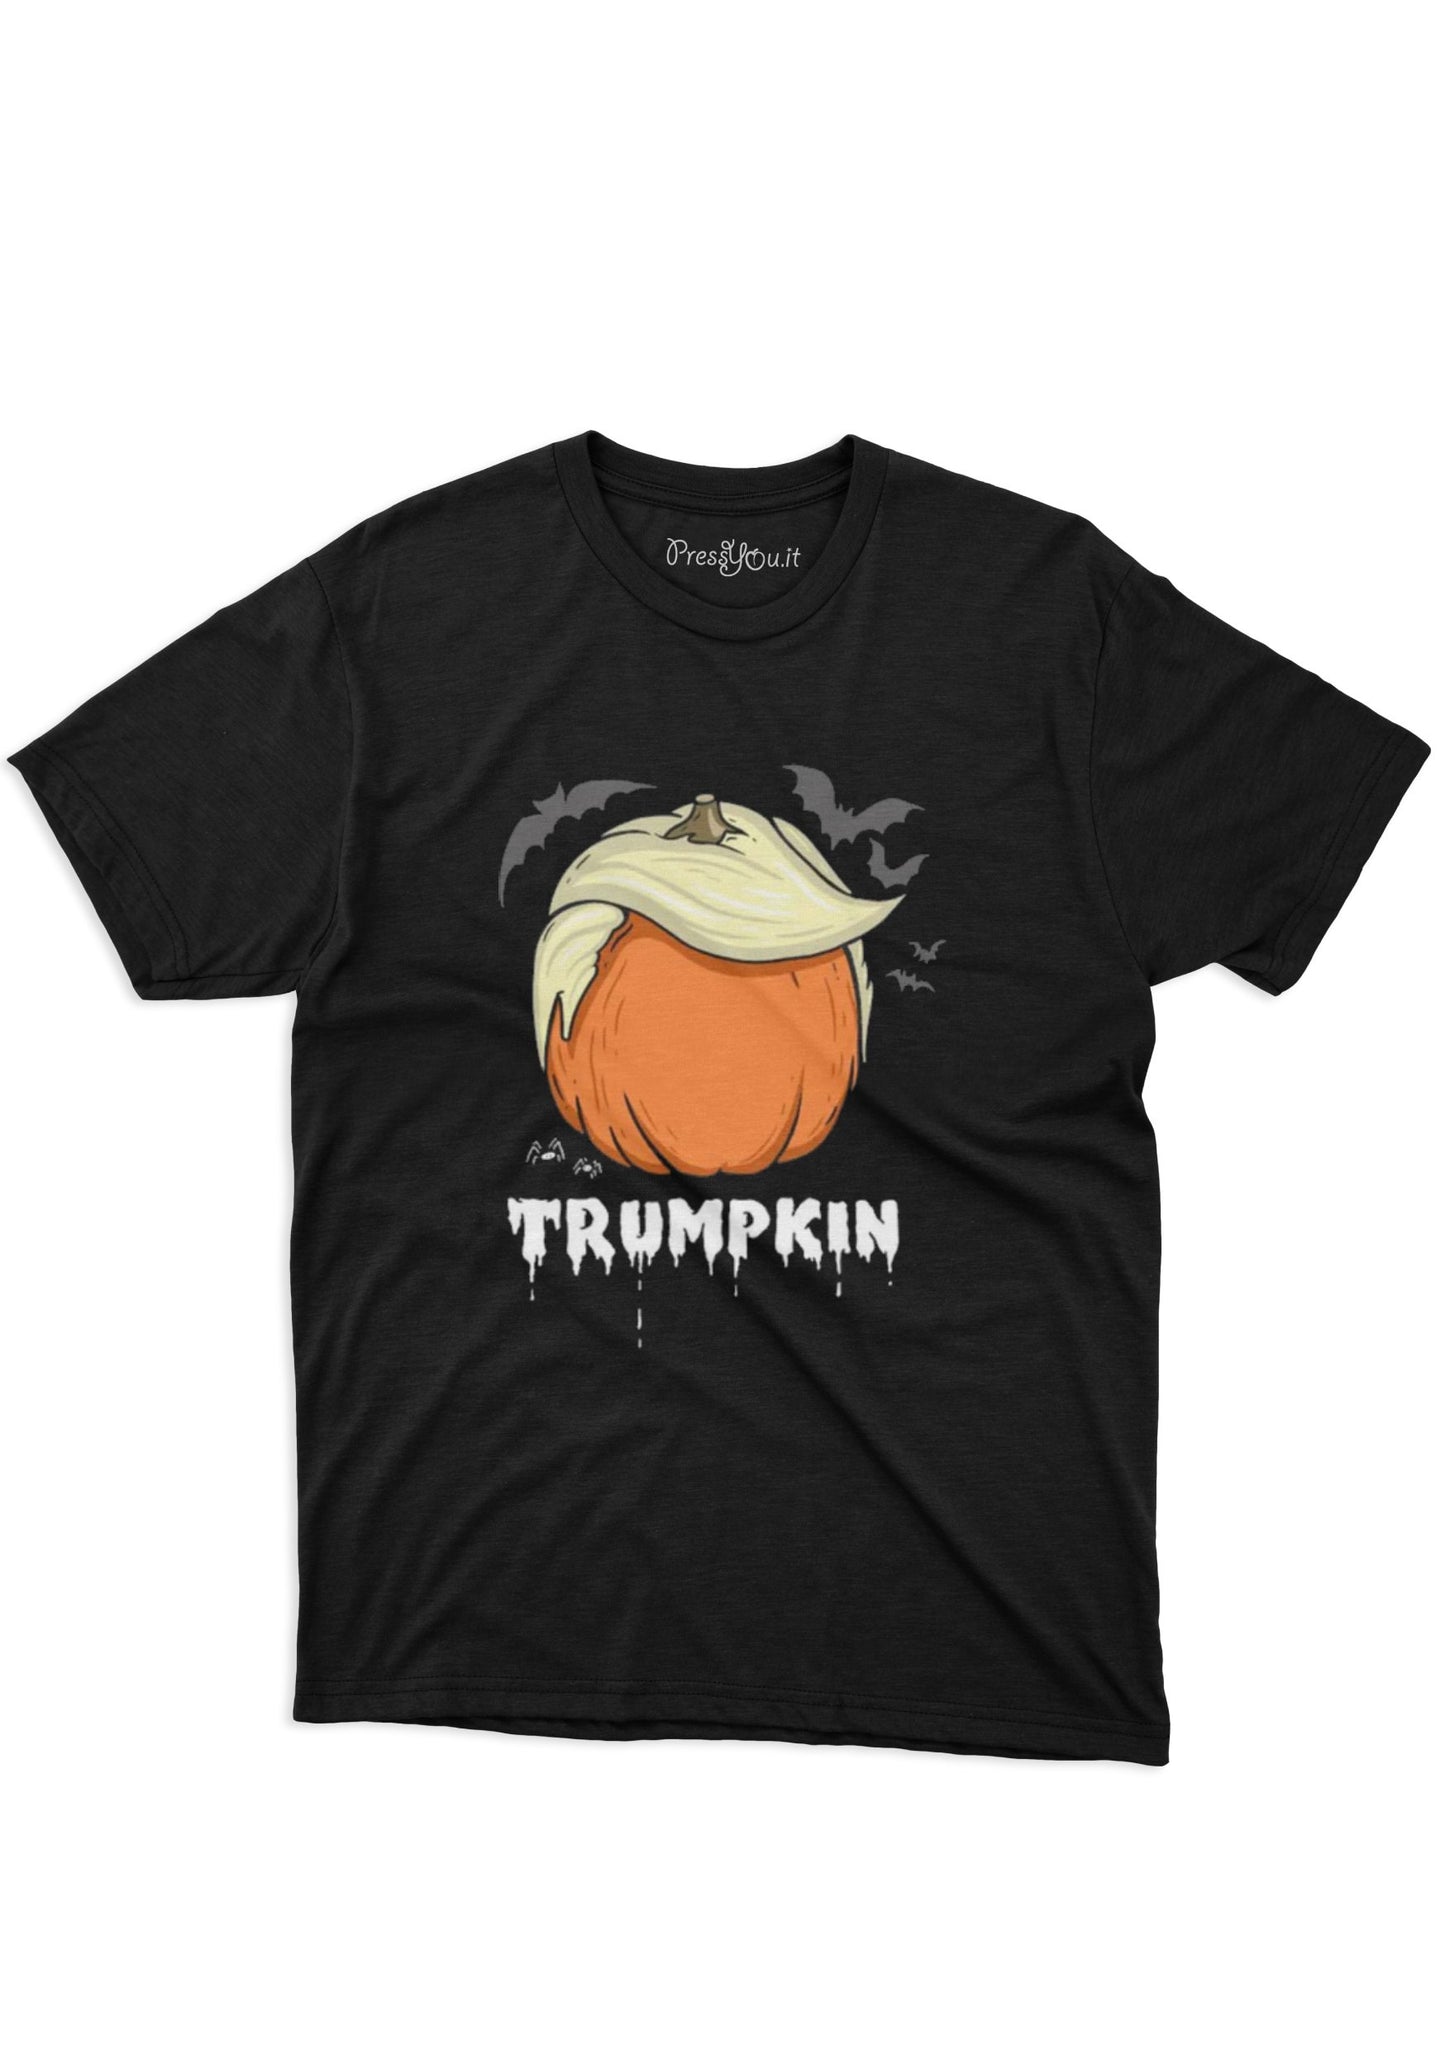 t-shirt-trump donald halloween trumokin pumpkin